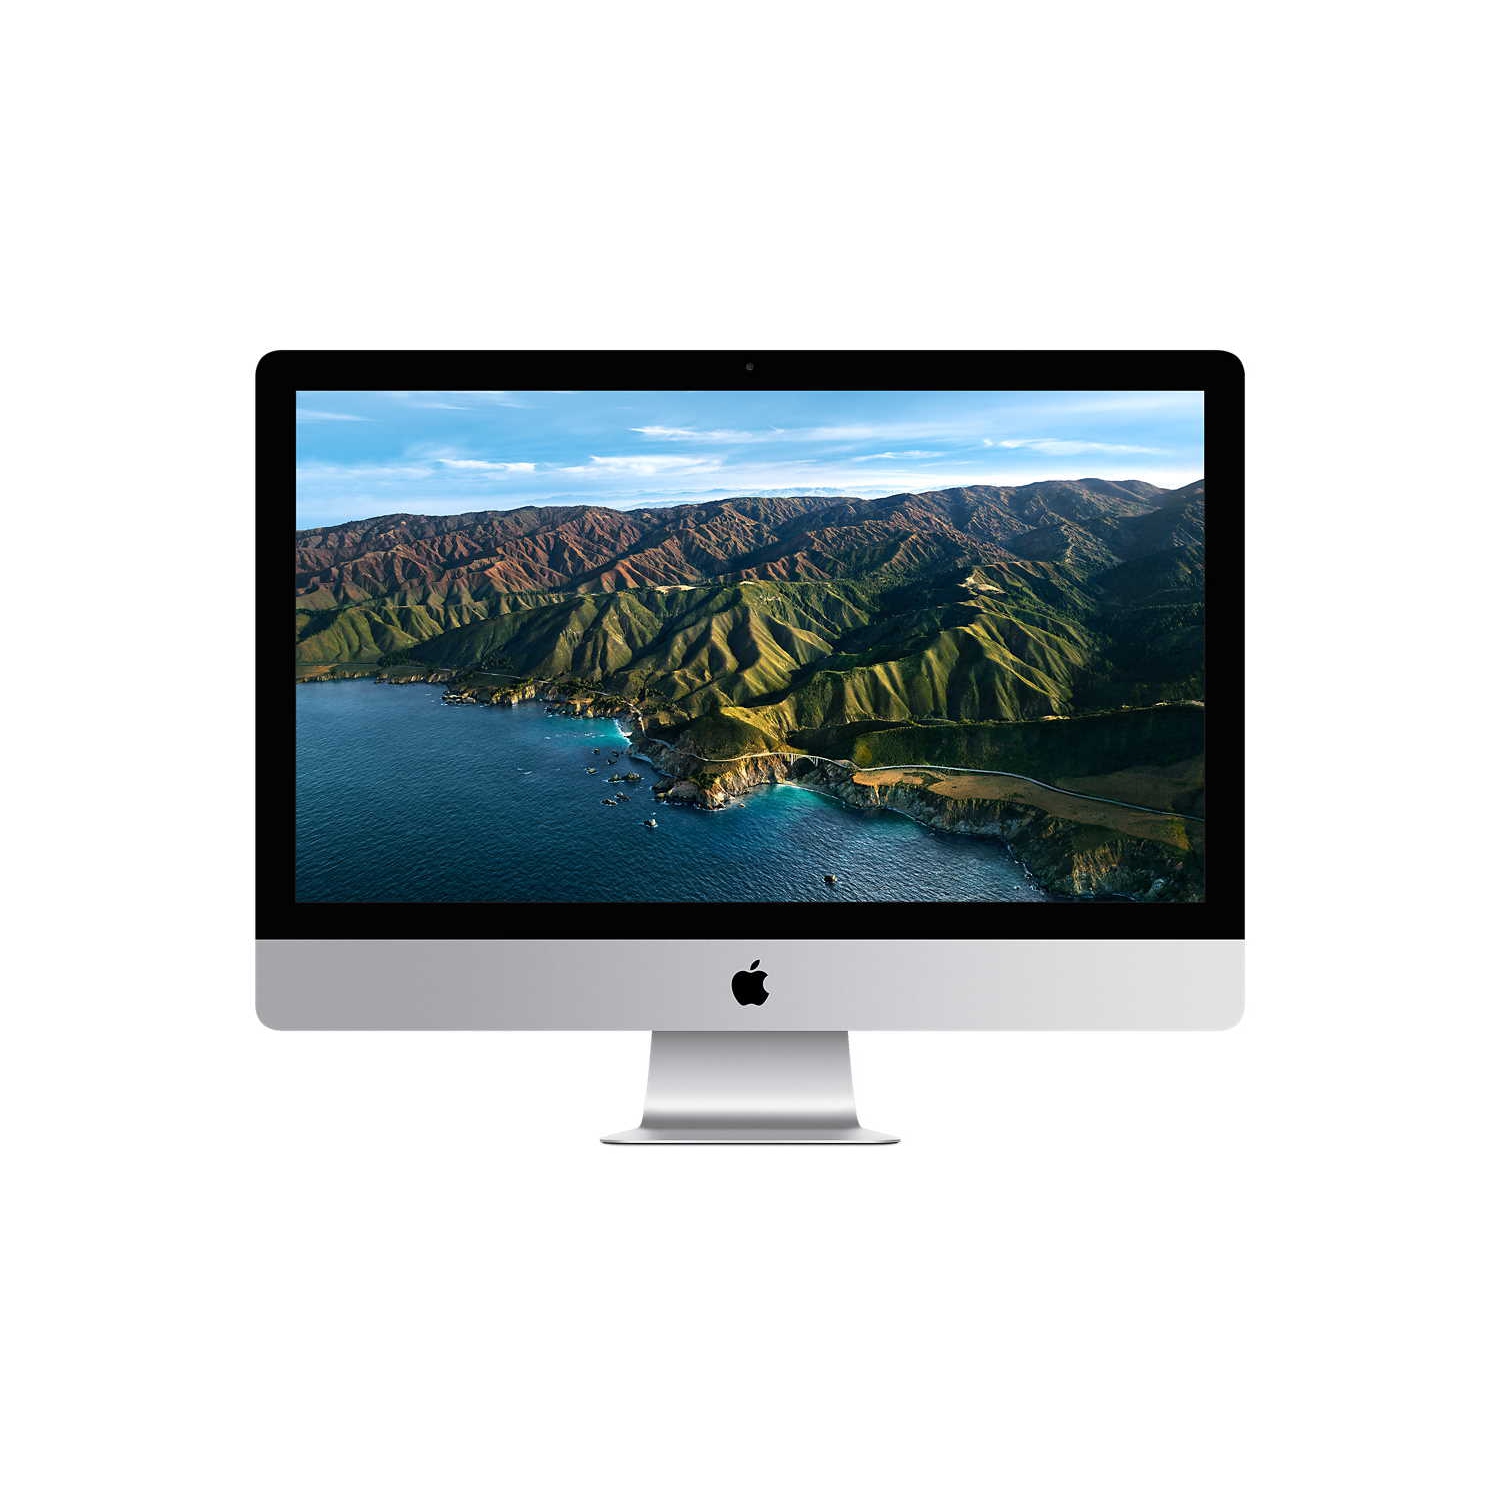 Good) iMac 27-inch (Retina 5K) 3.1GHZ 6-Core i5 (2020) MXWT2LL 